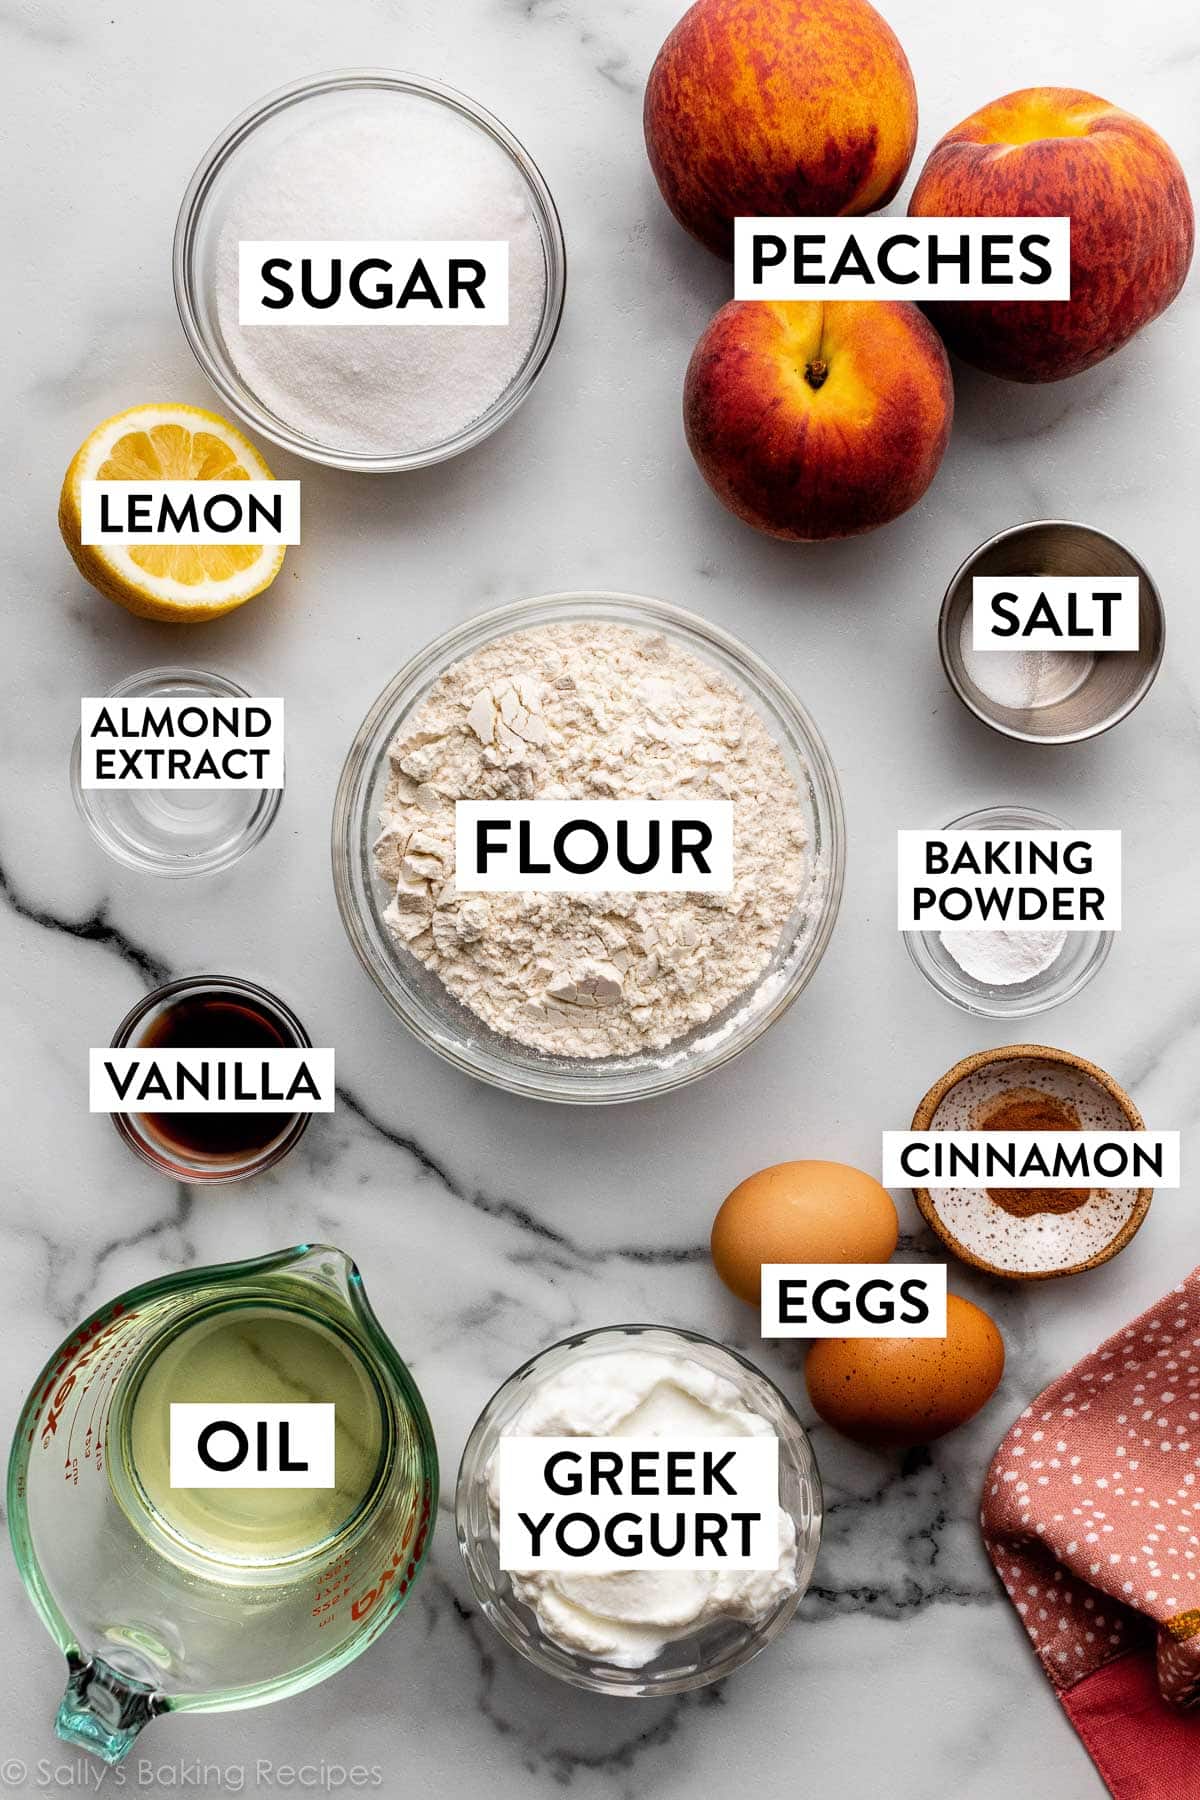 ingredients on marble counter including peaches, sugar, lemon, salt, flour, oil, greek yogurt, eggs, and others.